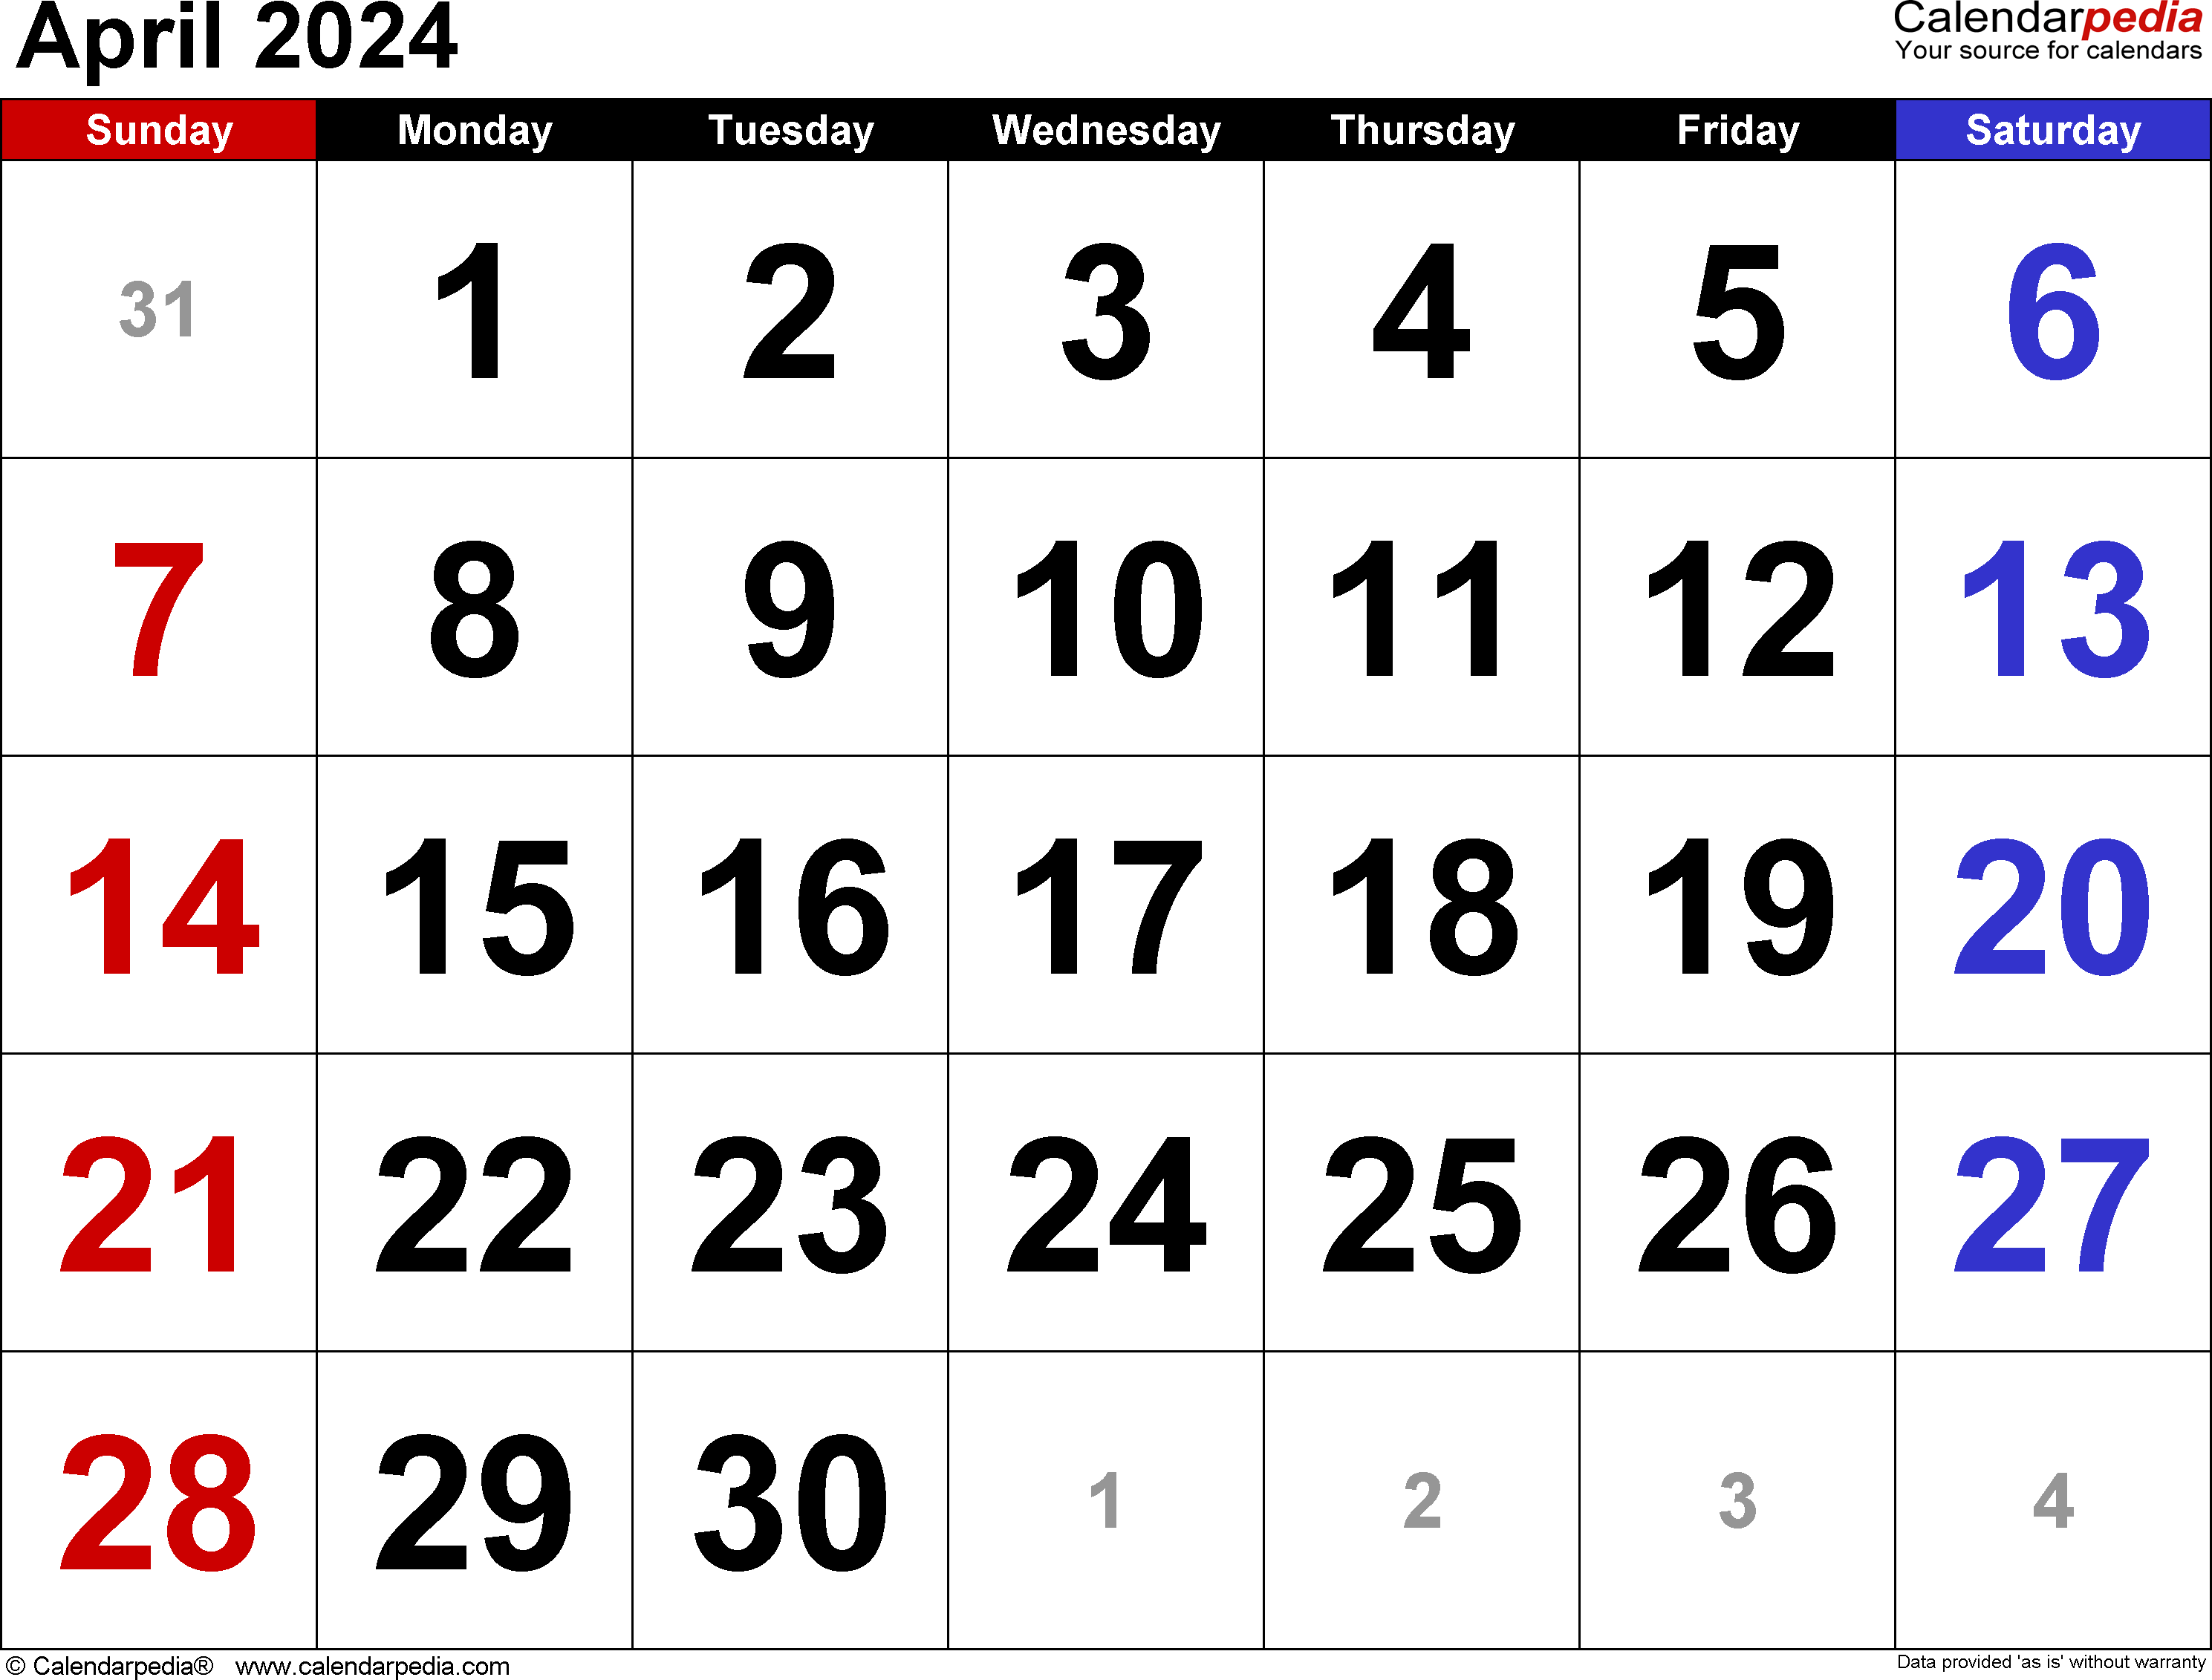 April 2024 Calendar | Templates For Word, Excel And Pdf with regard to Show Me A Calendar Of April 2024